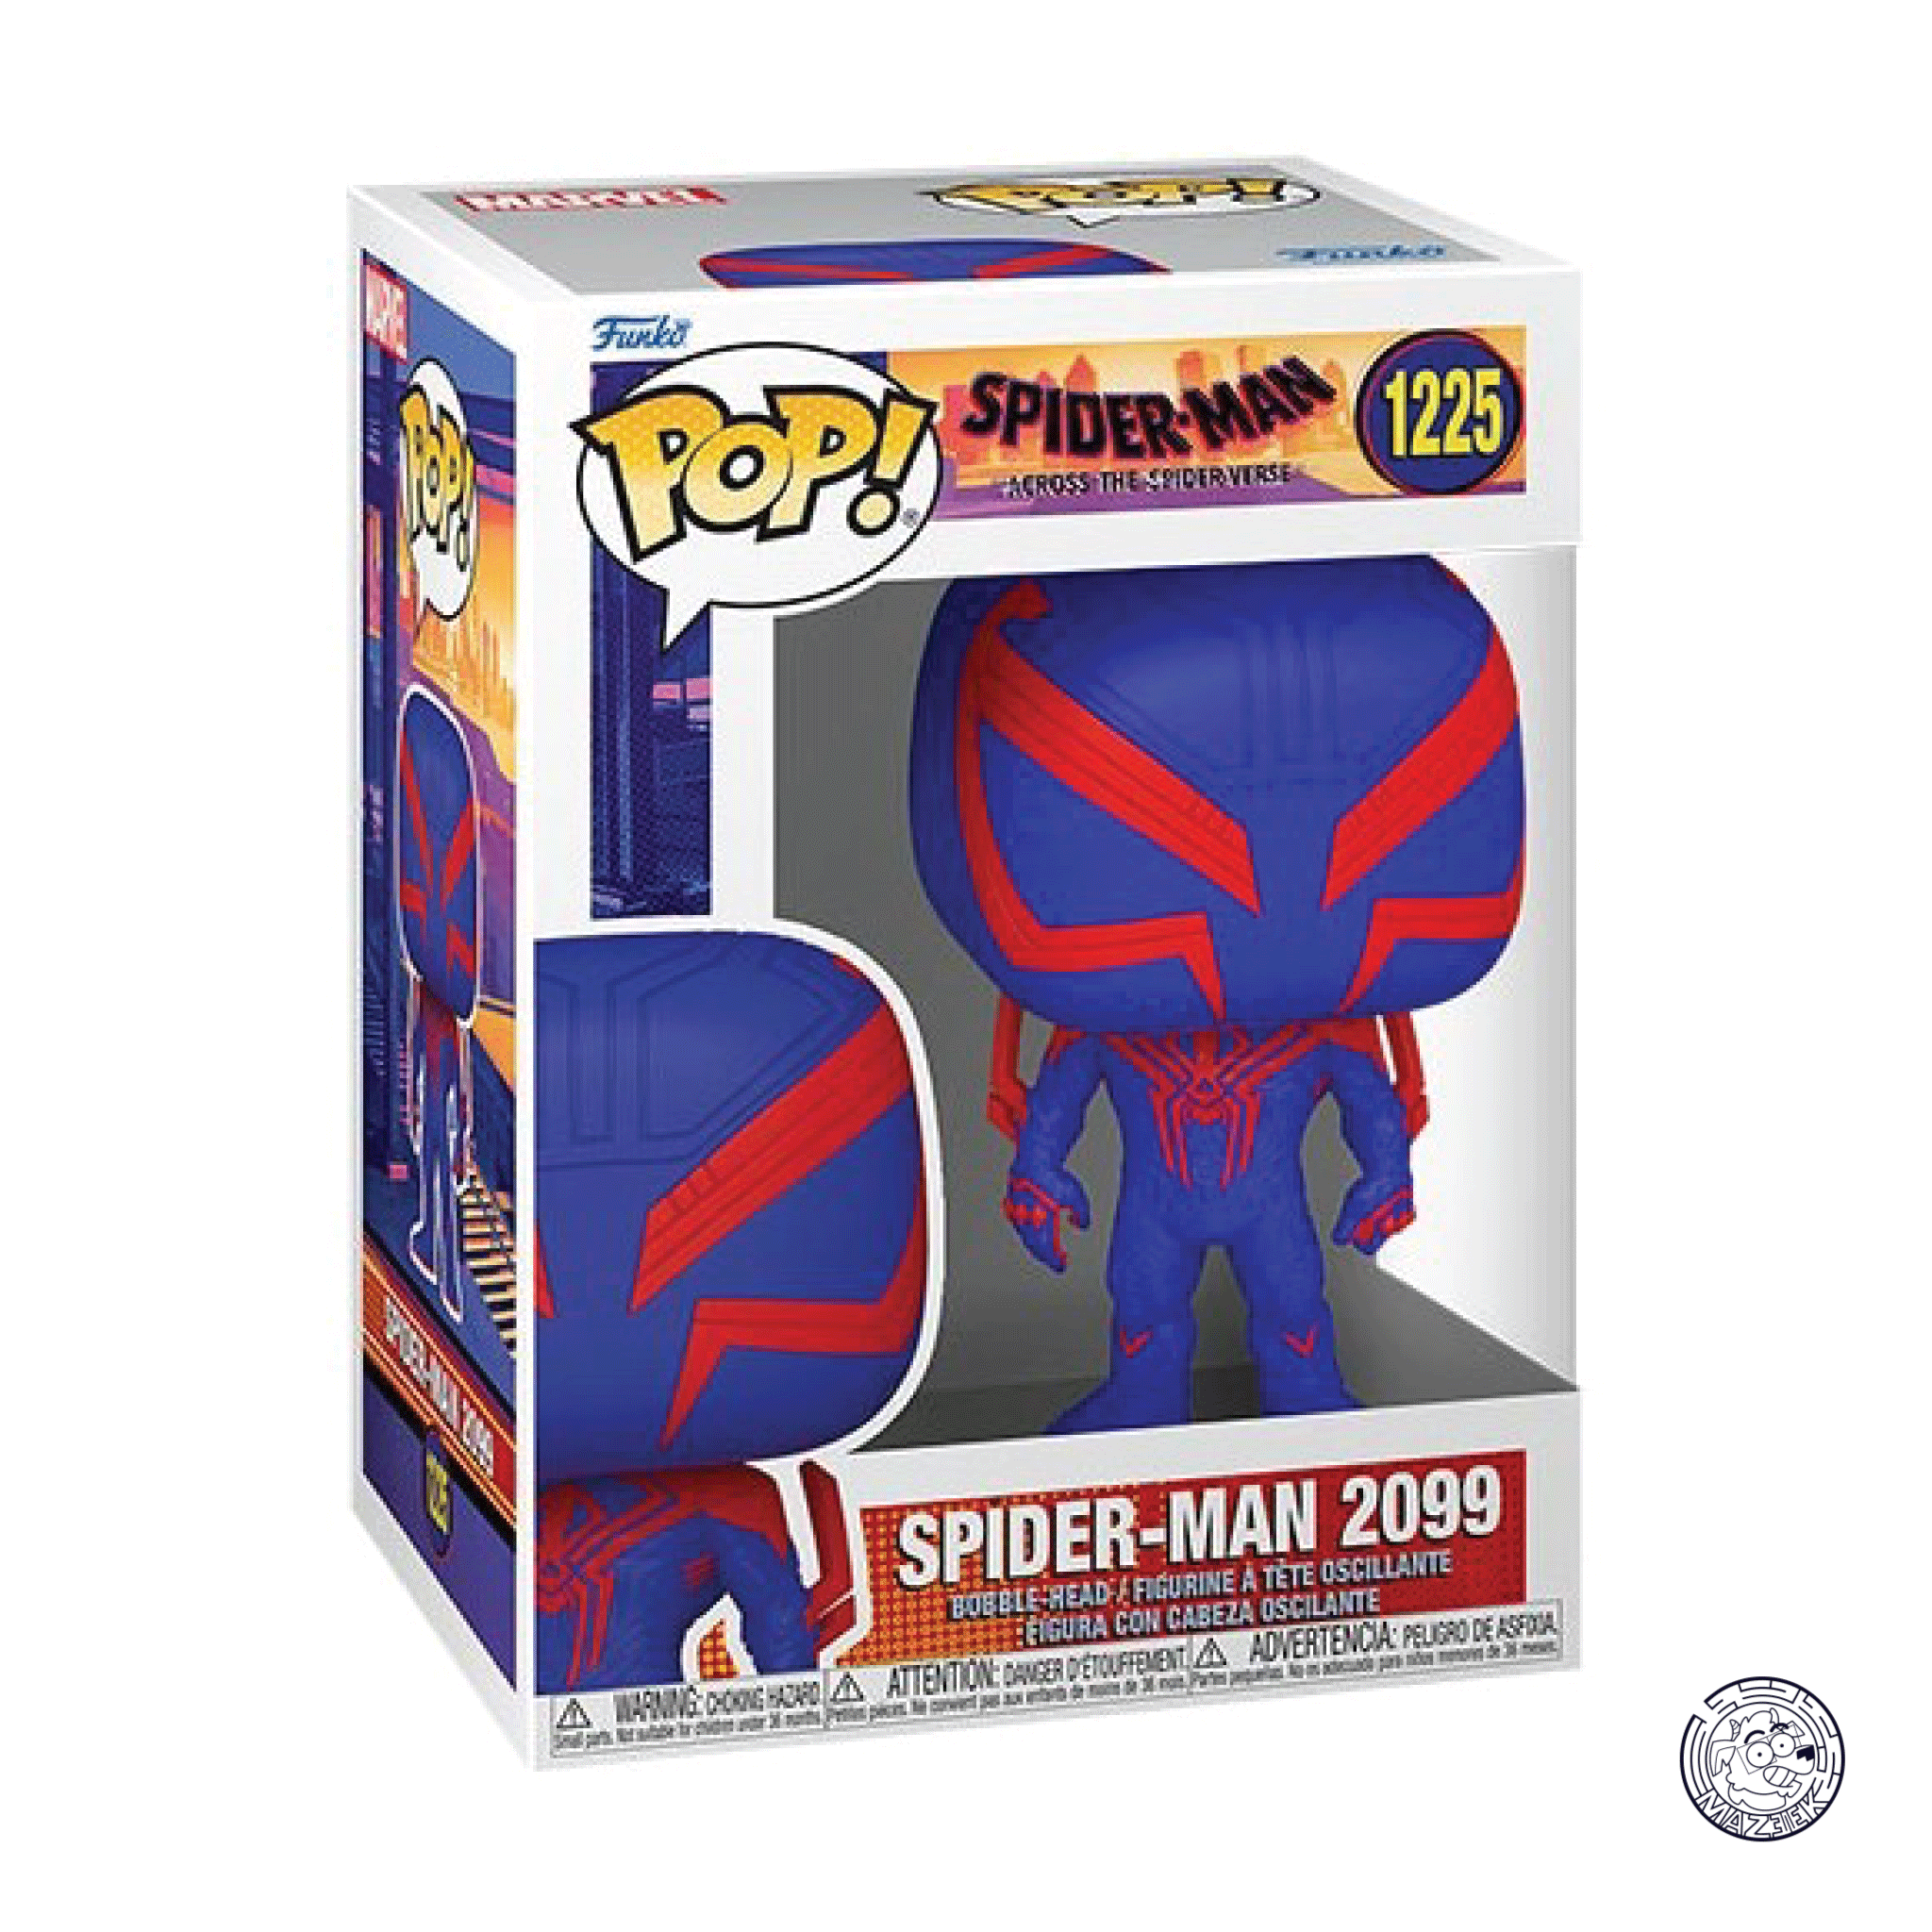 Funko POP! Spider-Man Across the SpiderVerse: Spider-Man 2099 1225